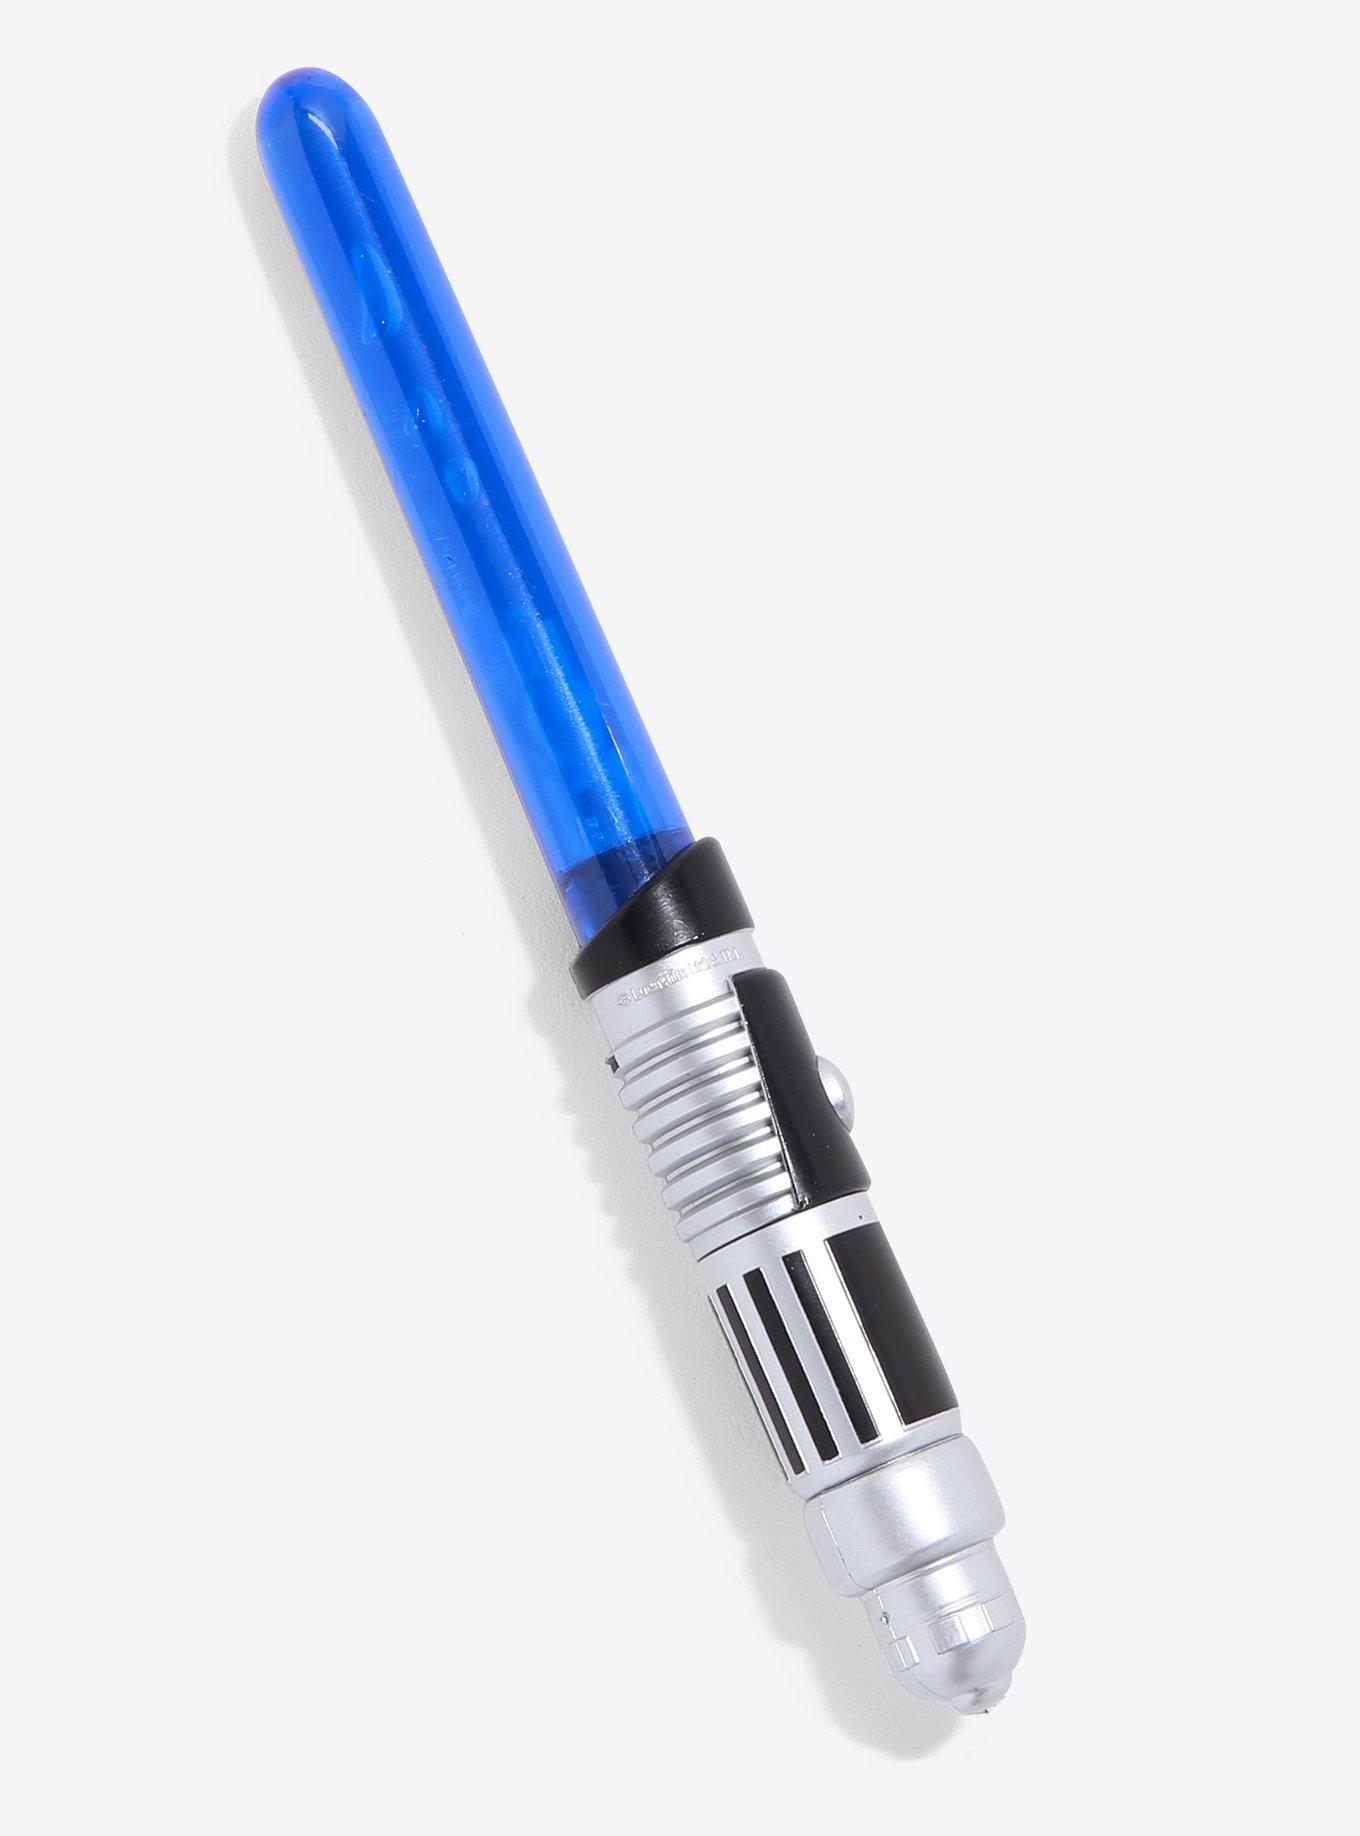 Disney Star Wars Light up Light saber Pen with collectible tin box